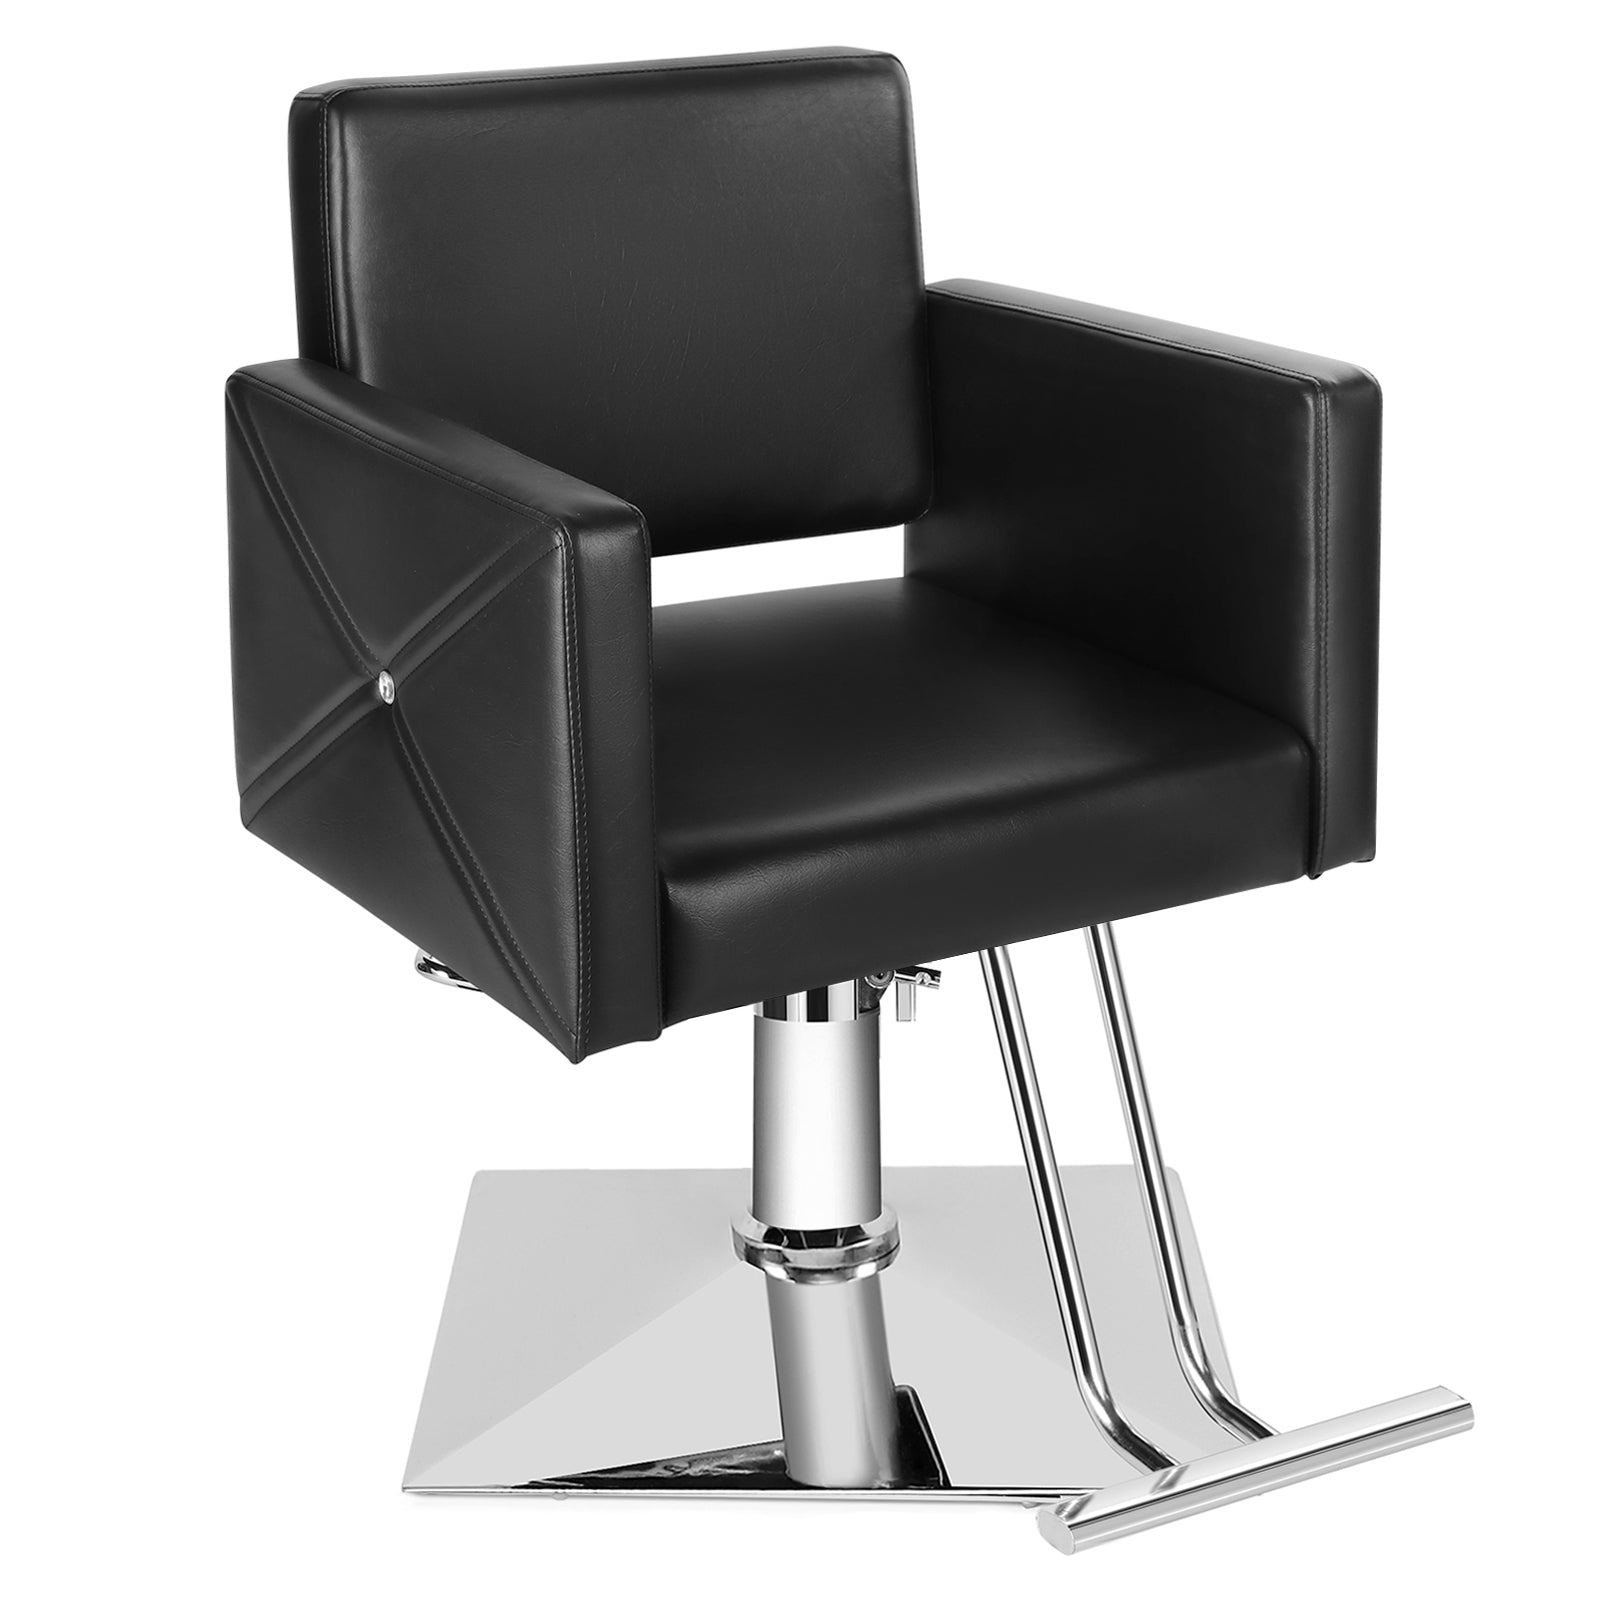 #5037 Hydraulic Styling Chair Heavy Duty Salon Chair Barber Chair